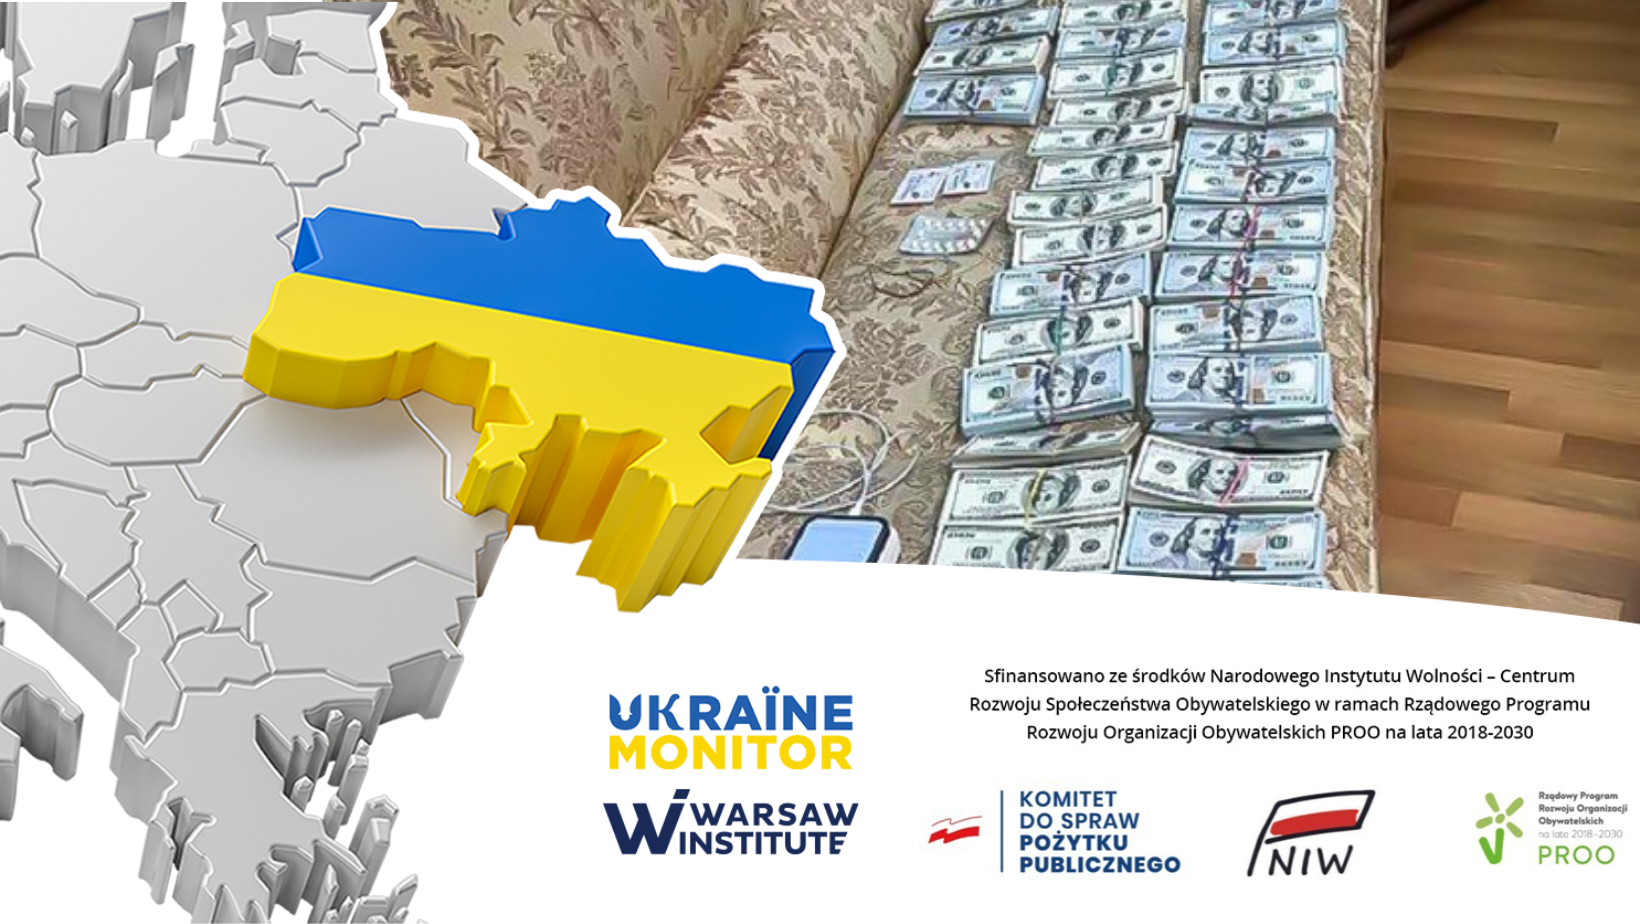 Ukraine Shocked By New Courtroom Corruption Scandals